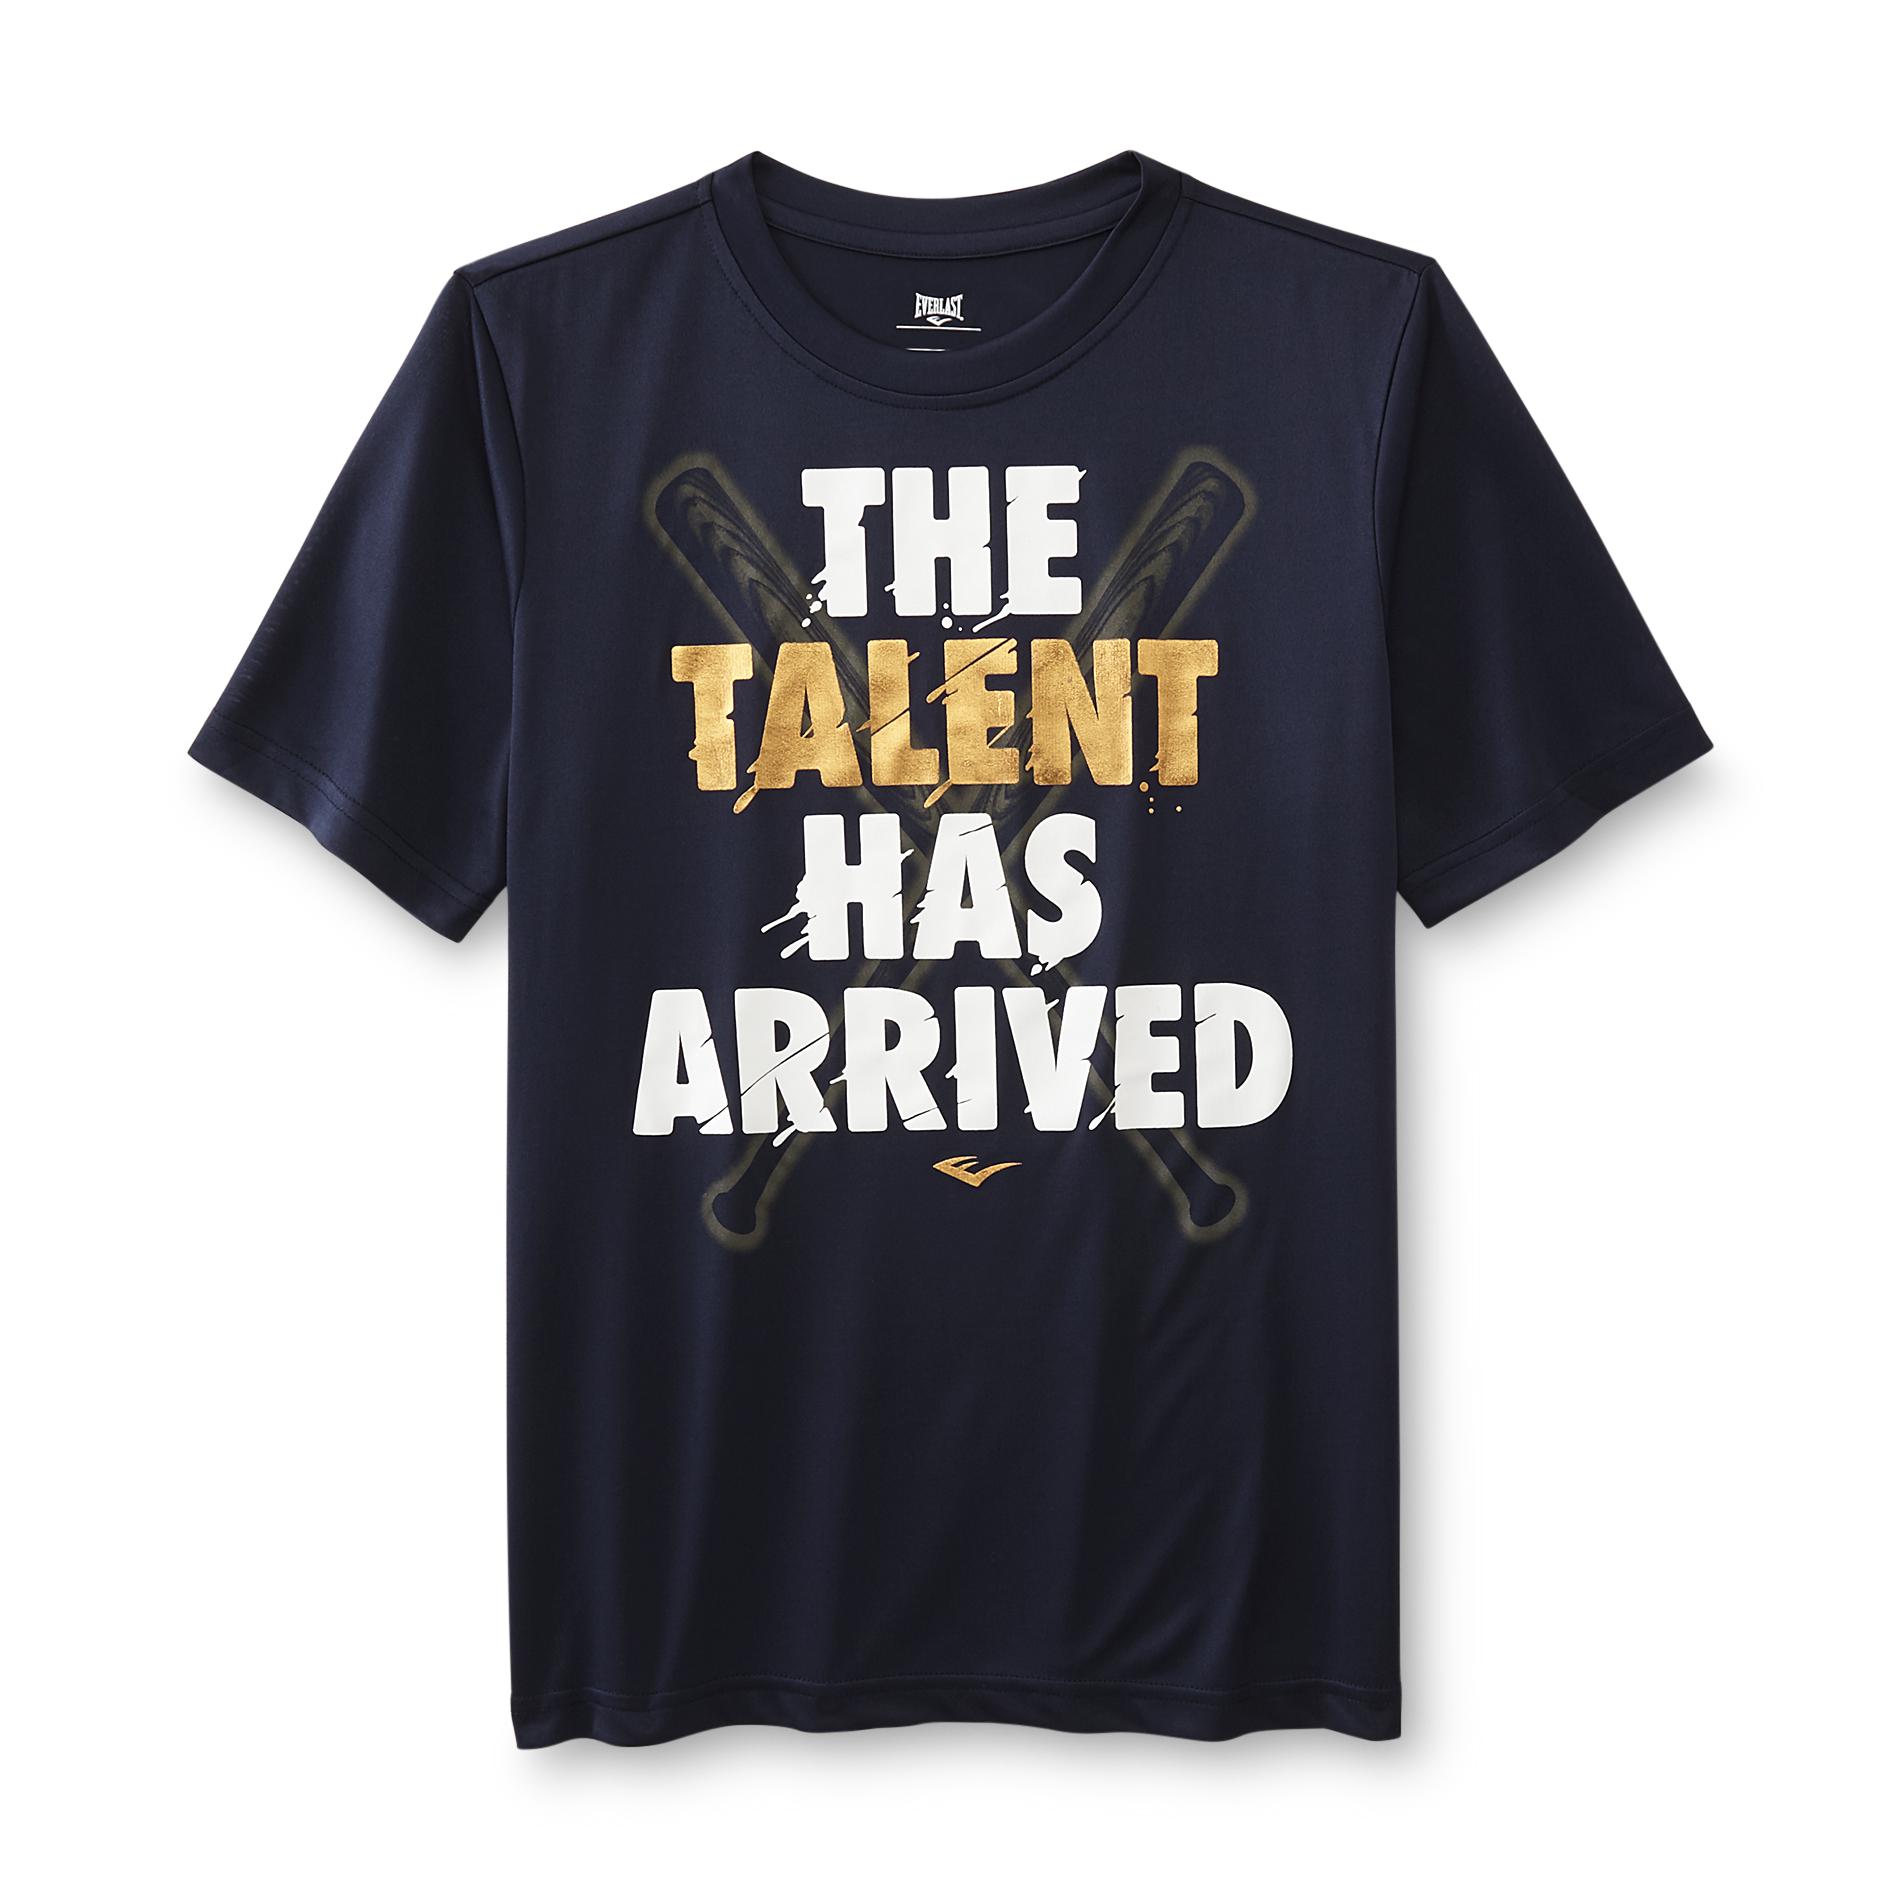 Everlast&reg; Boy's Graphic Athletic T-Shirt - Talent